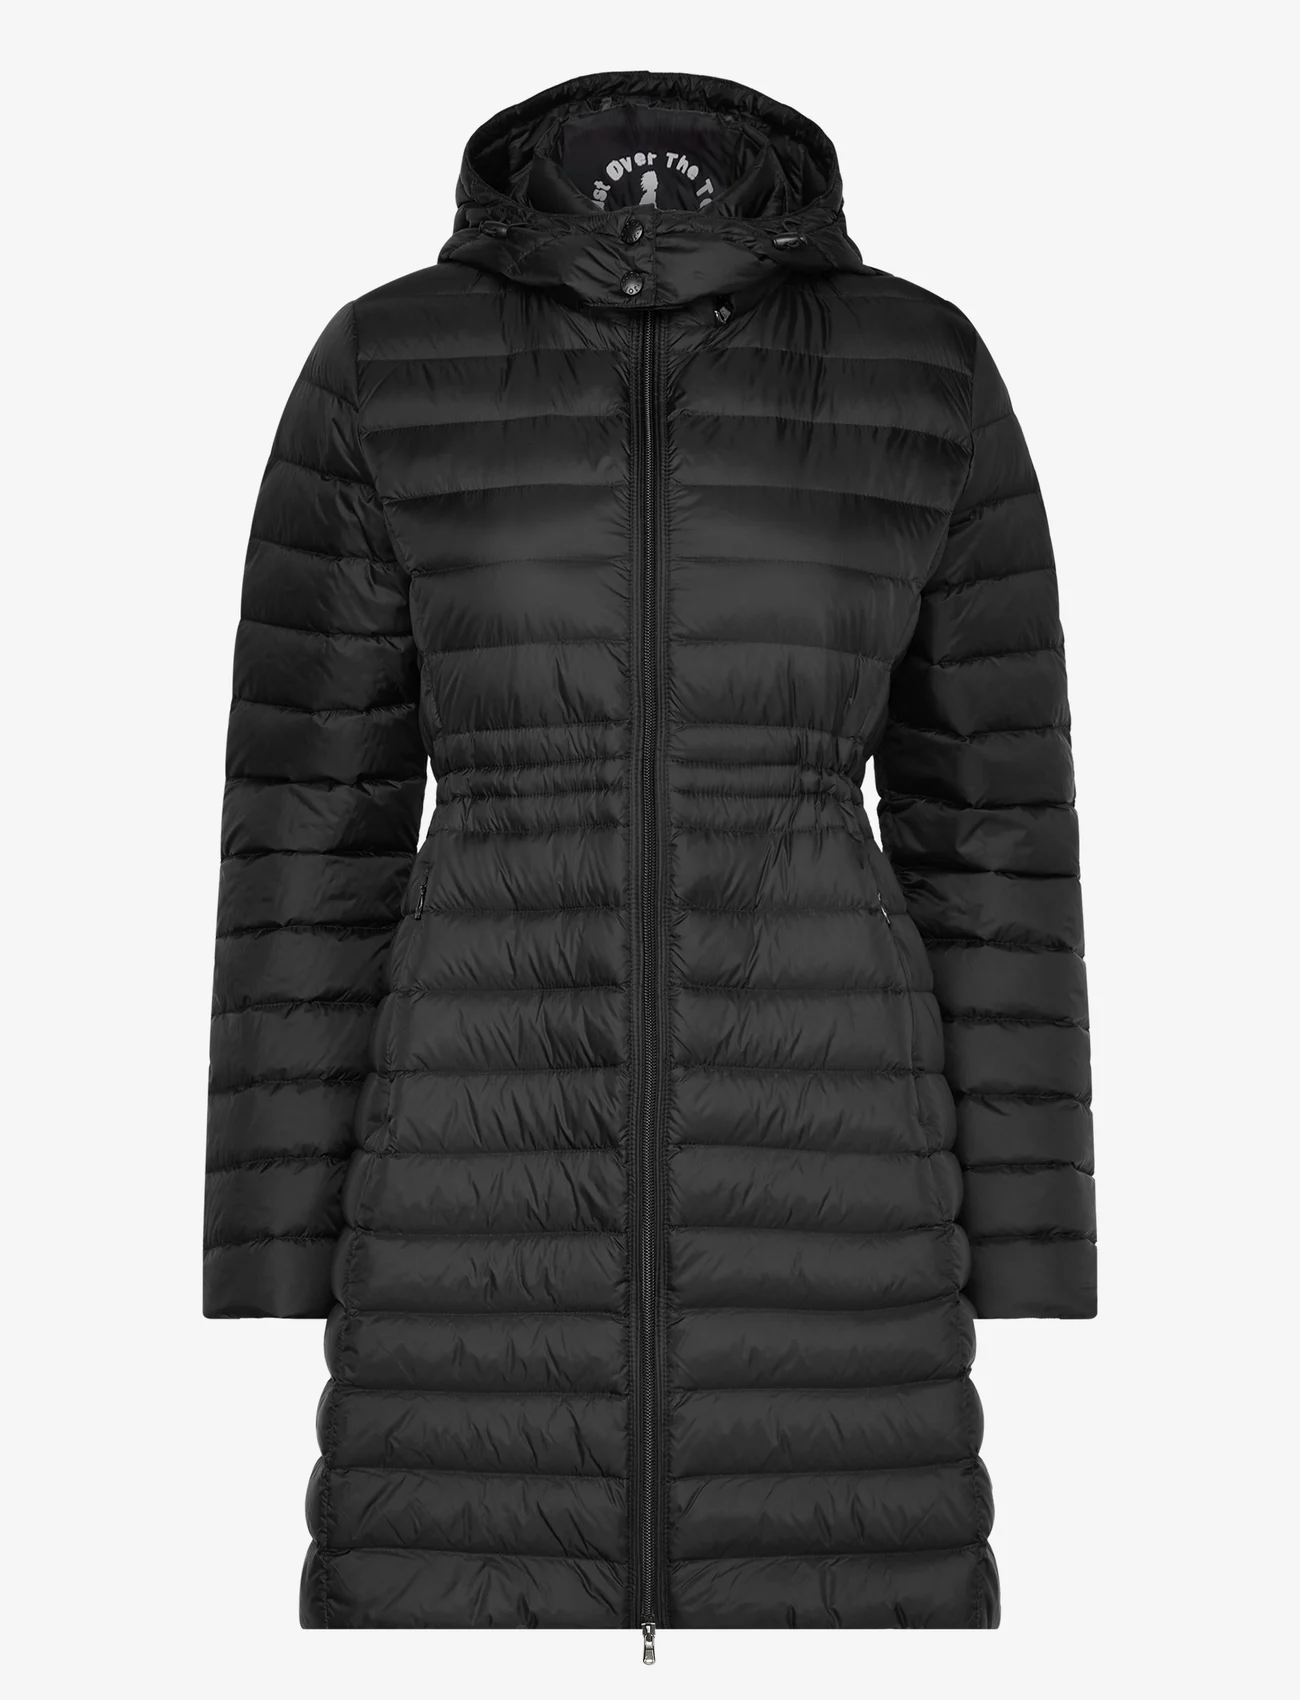 JOTT - Vero ML capuche long  basique - winter jackets - noir - 0